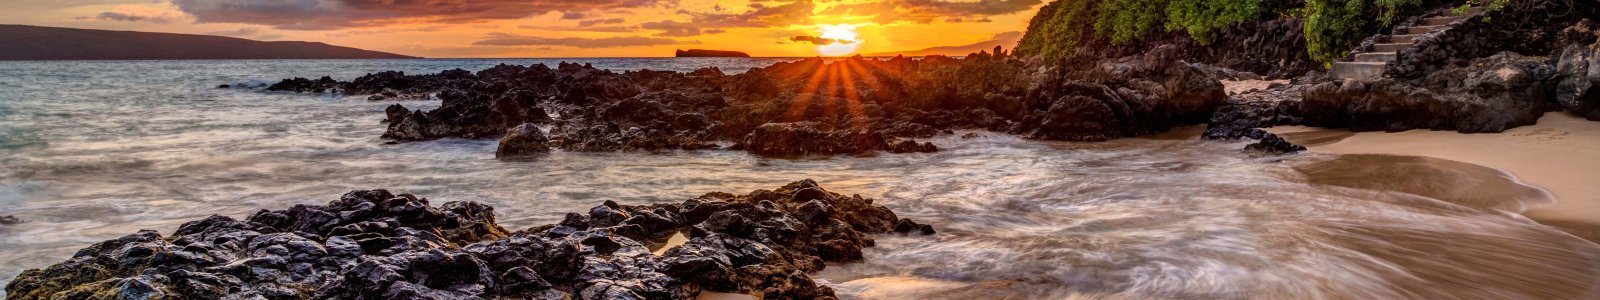 Top 5 Maui Beaches for Families